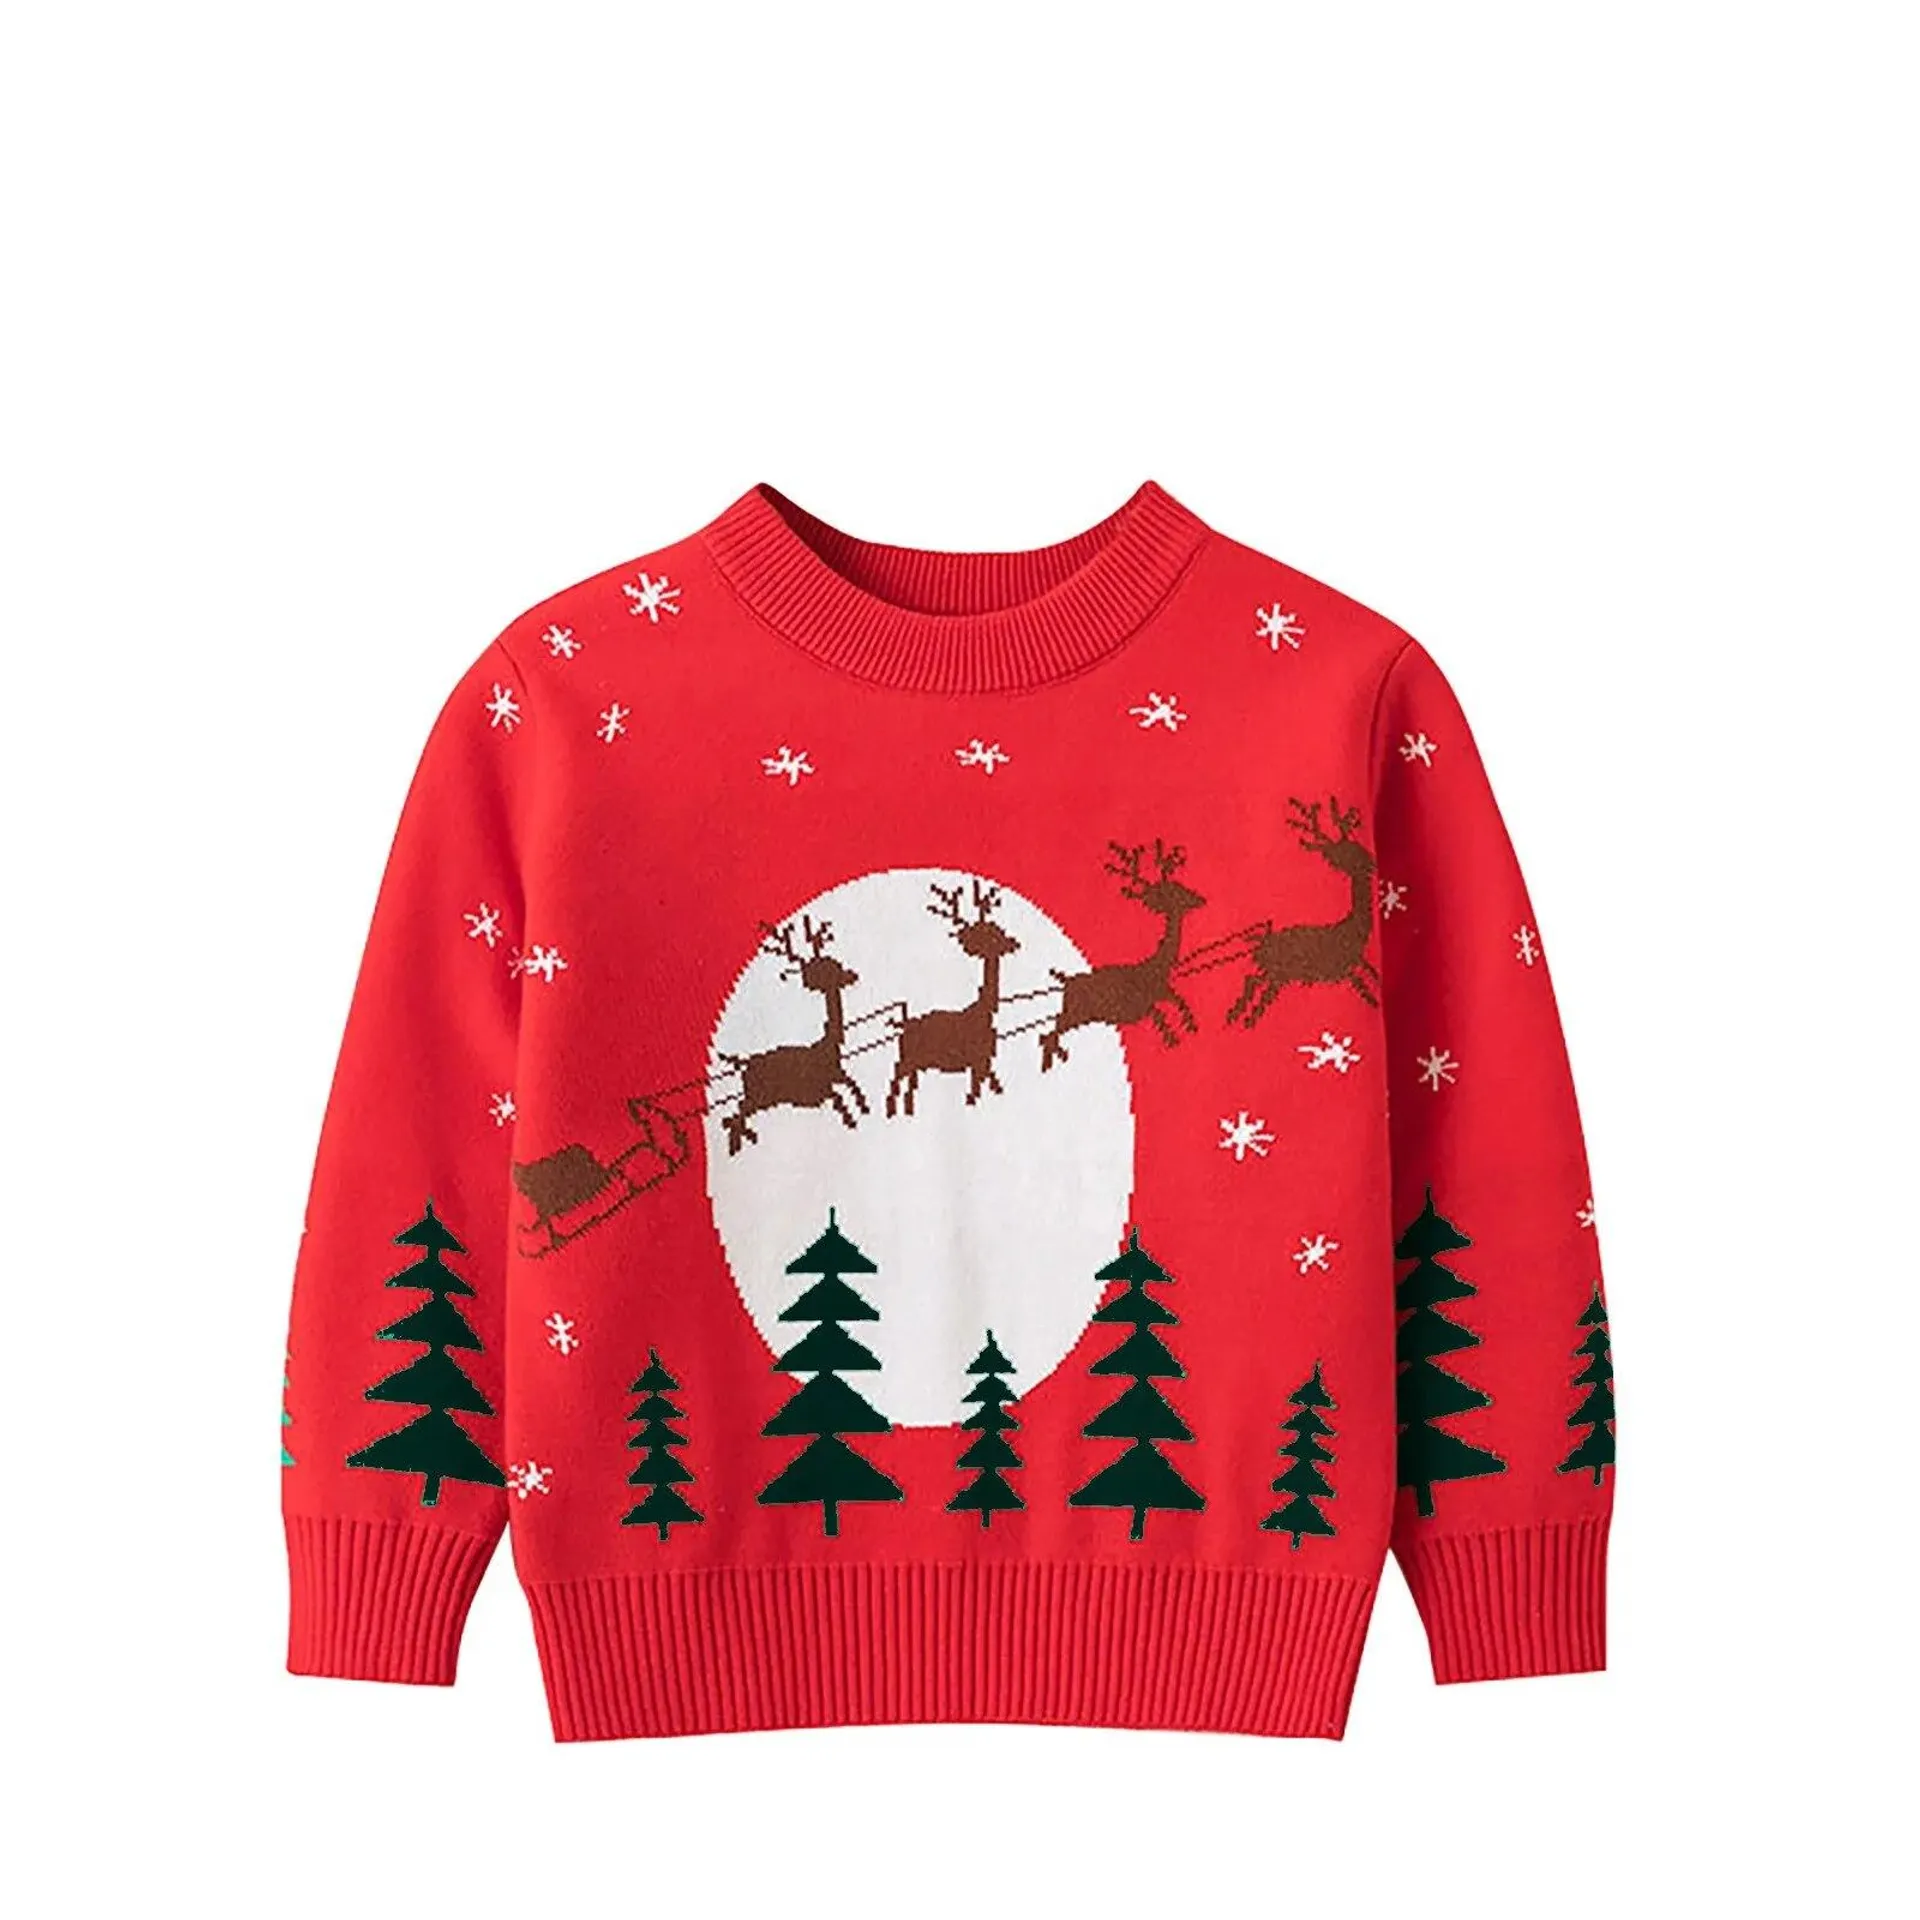 Toddler Youth Teen Boys Girls Christmas Cartoon Knit Print Sweater Knitwear